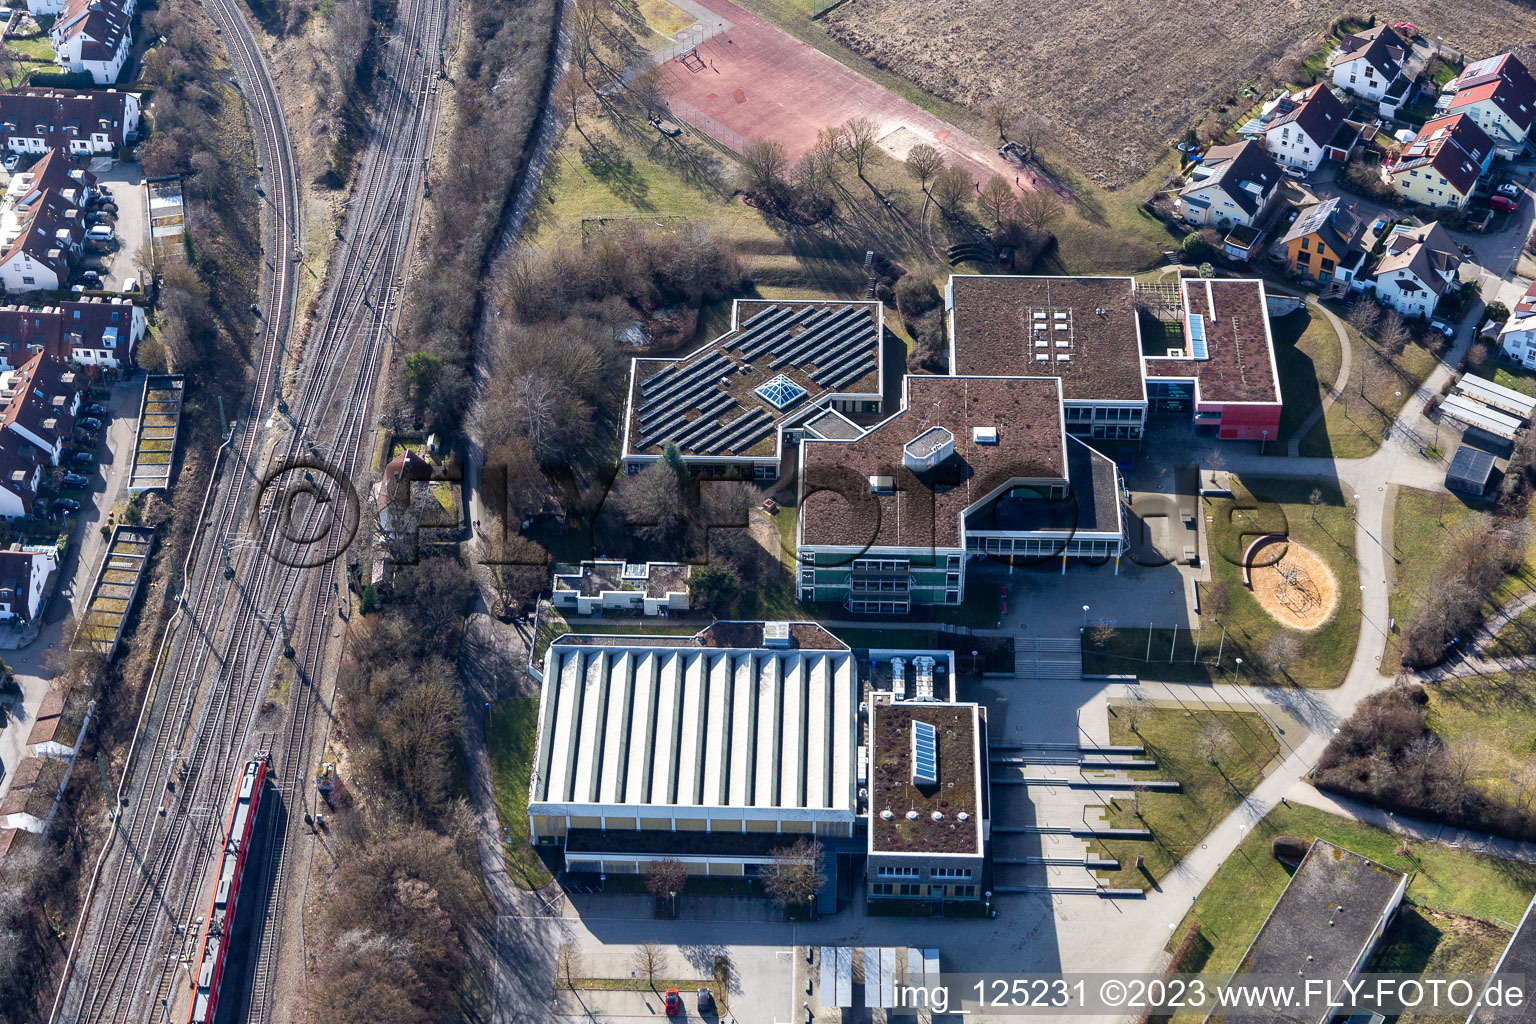 Andreae Gymnasium, Markweghalle in Herrenberg in the state Baden-Wuerttemberg, Germany